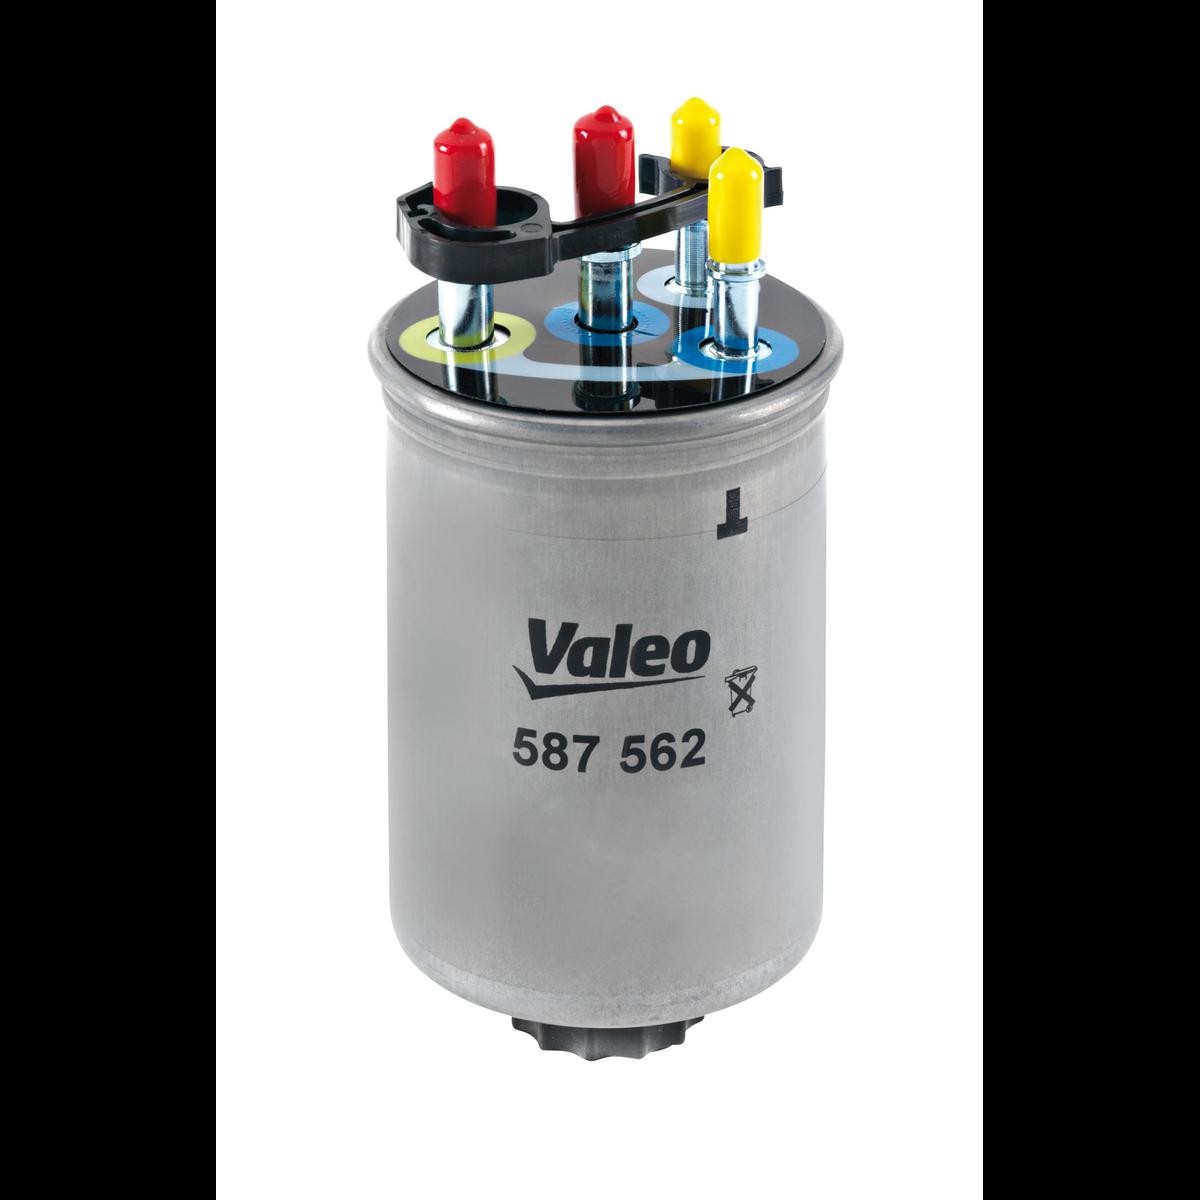 VALEO Kraftstofffilter LAND ROVER,JAGUAR 587562 C2C22269,C2C33299,C2C35810 Leitungsfilter,Spritfilter XR857585,LR007311,LR010075,WJN500012,WJN500025 von VALEO